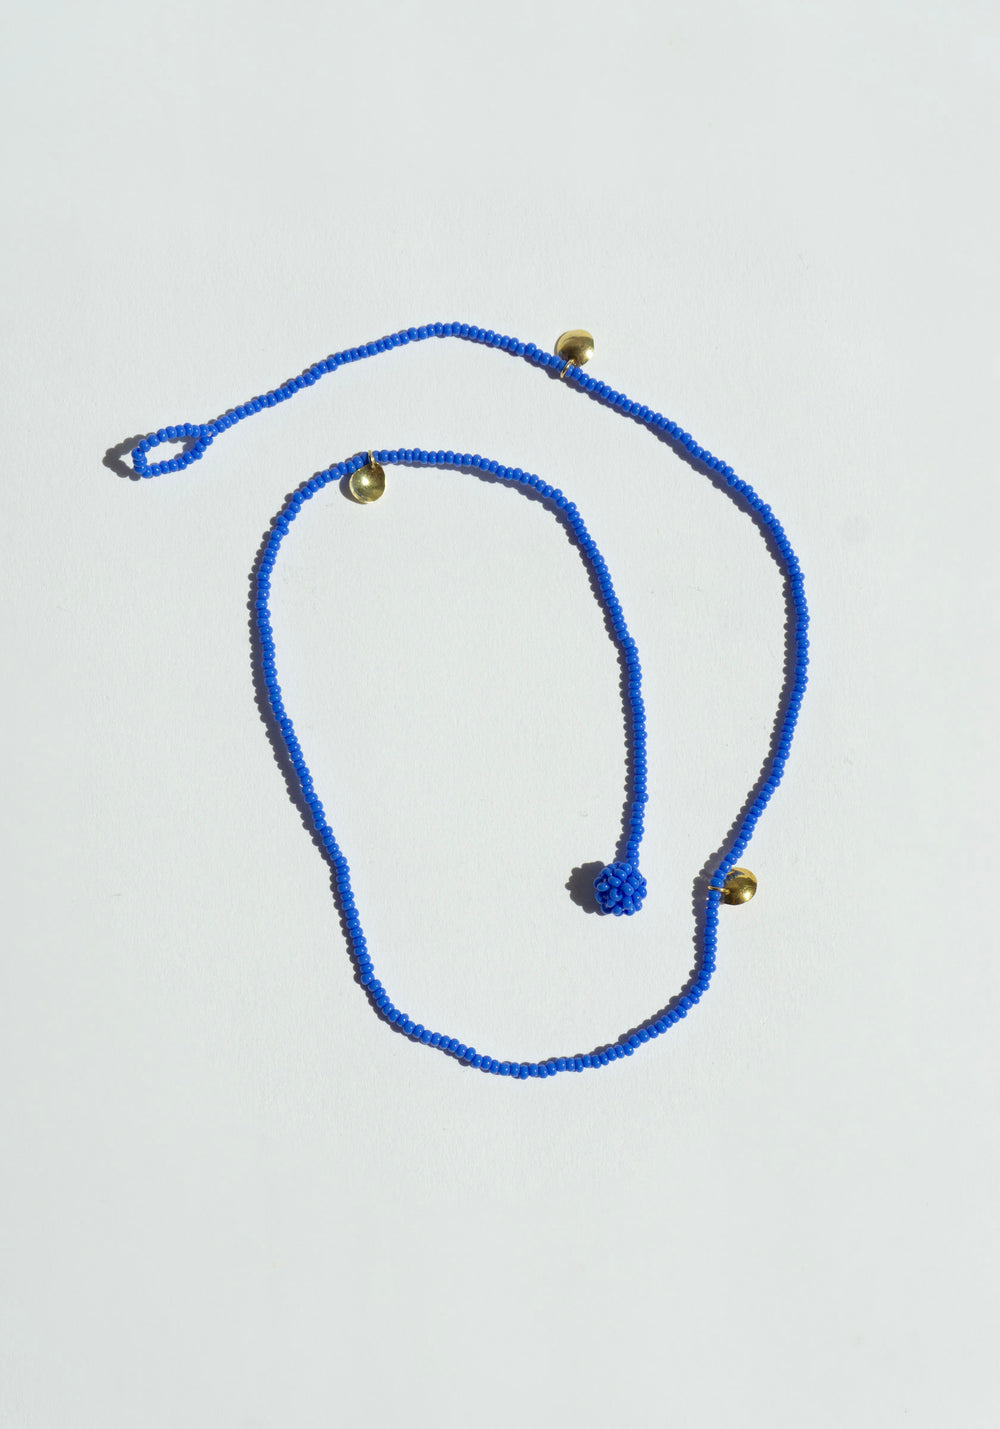 Mare Gold Sayulita 3 Dangling Necklace in Lavender Blue